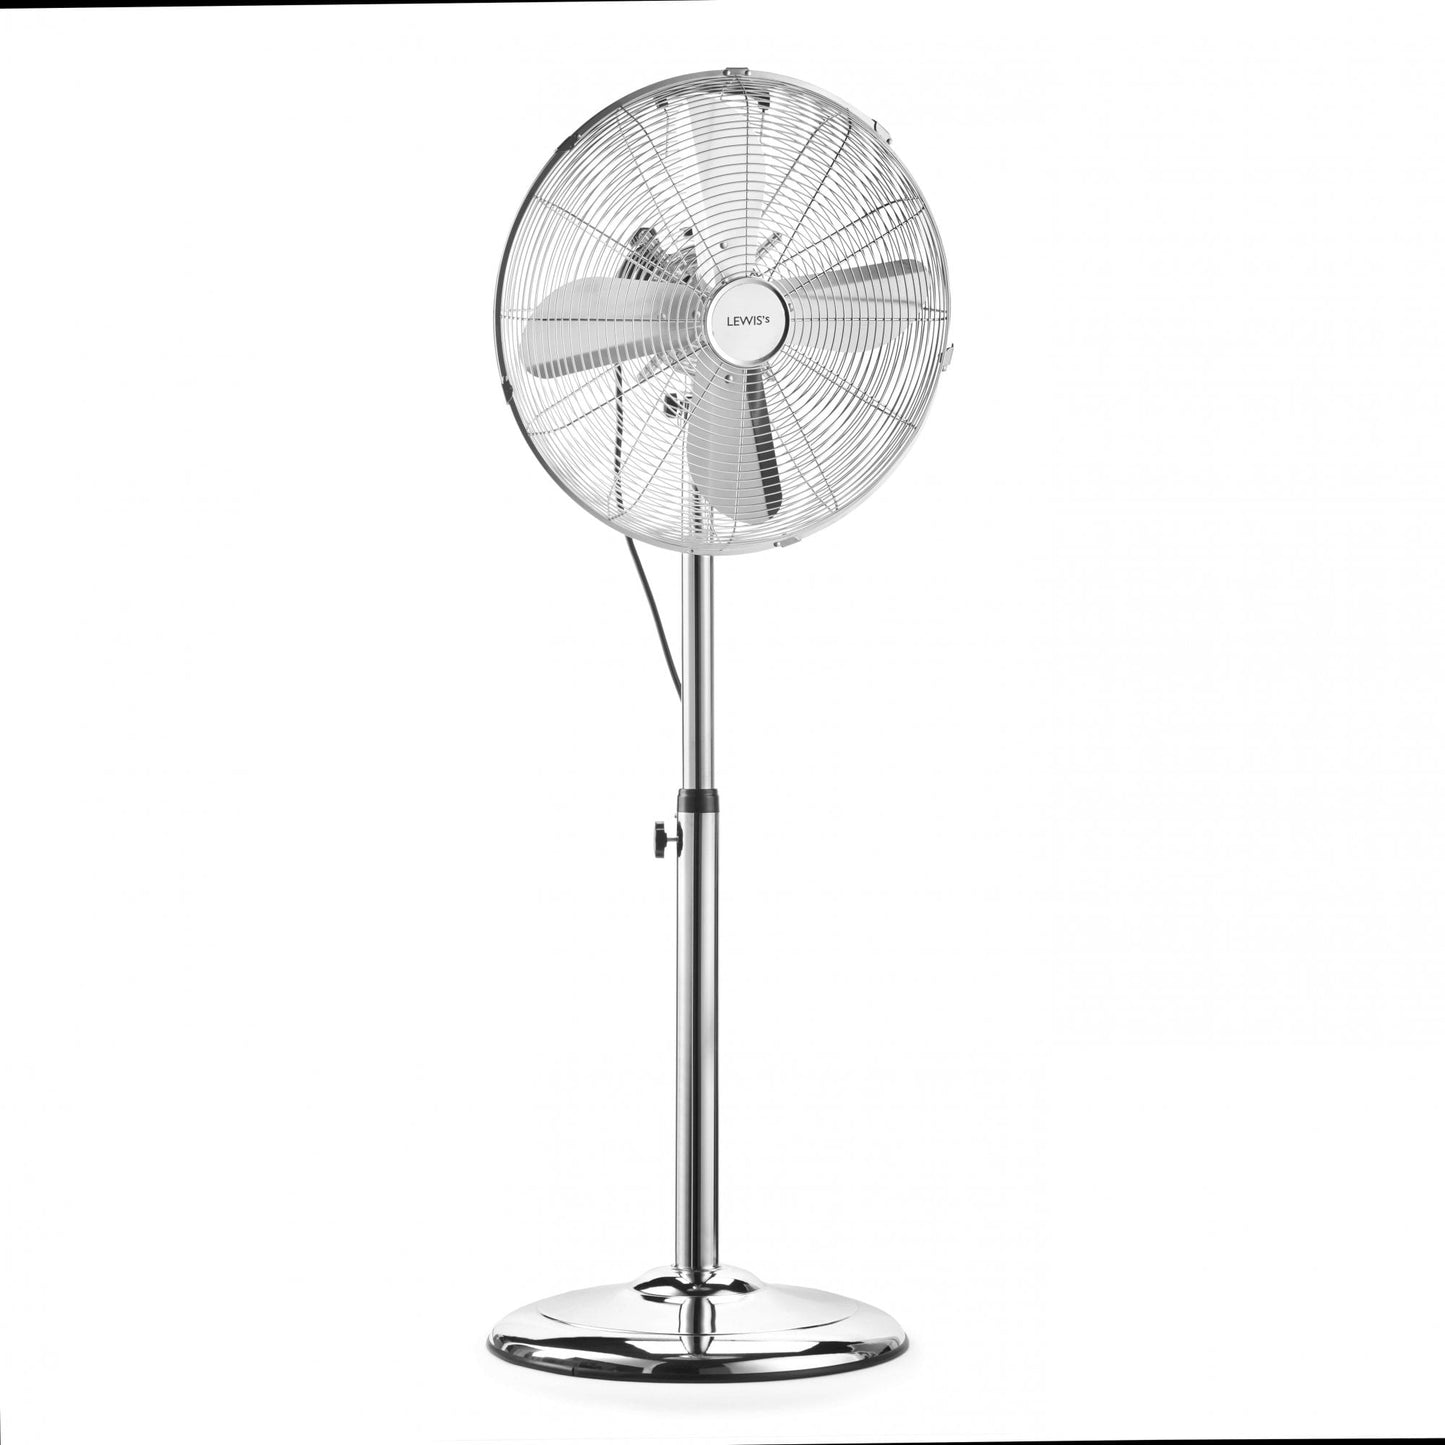 Lewis’s 16 Inch Pedestal Stand Fan - Pedestal Fan - 16 inch Pedestal Fan, 16 Inch Stand Fan, Standing Fans, Standing Cooling Fan, Standing Fans, Oscillating Fans, Cooling Fans For Home (Chrome)